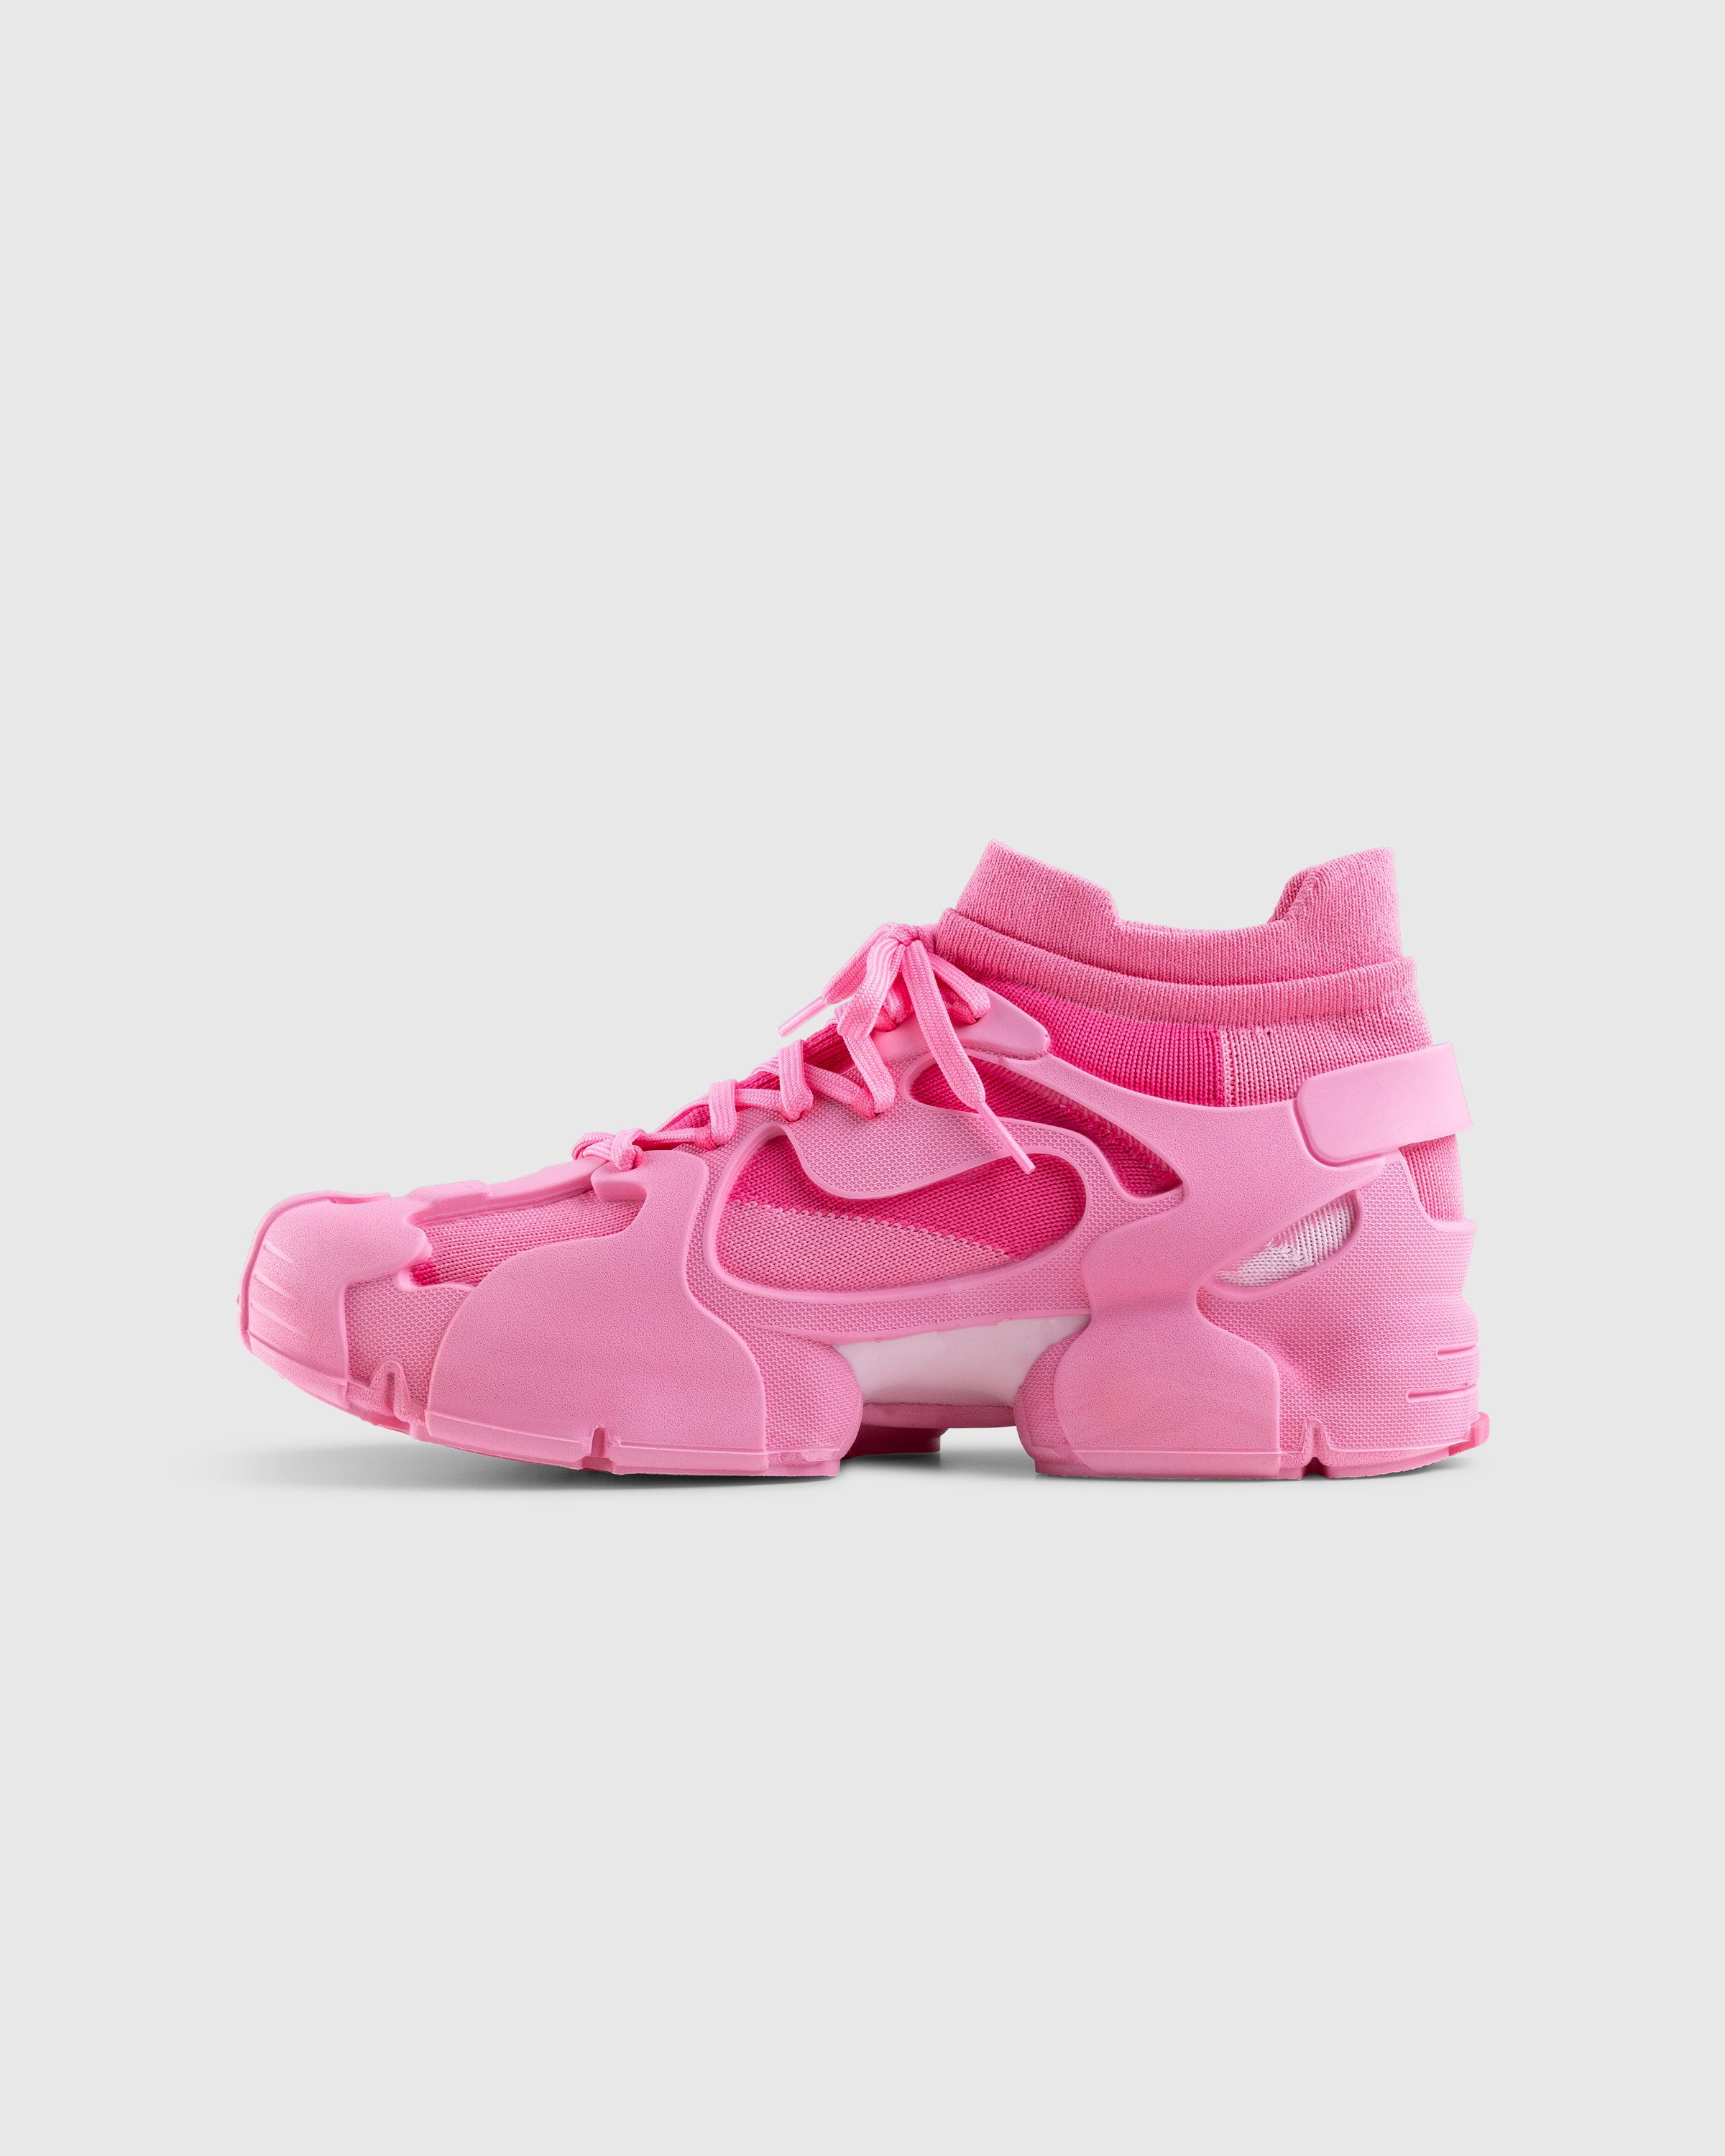 CAMPERLAB - Tossu Pink - Footwear - Pink - Image 2